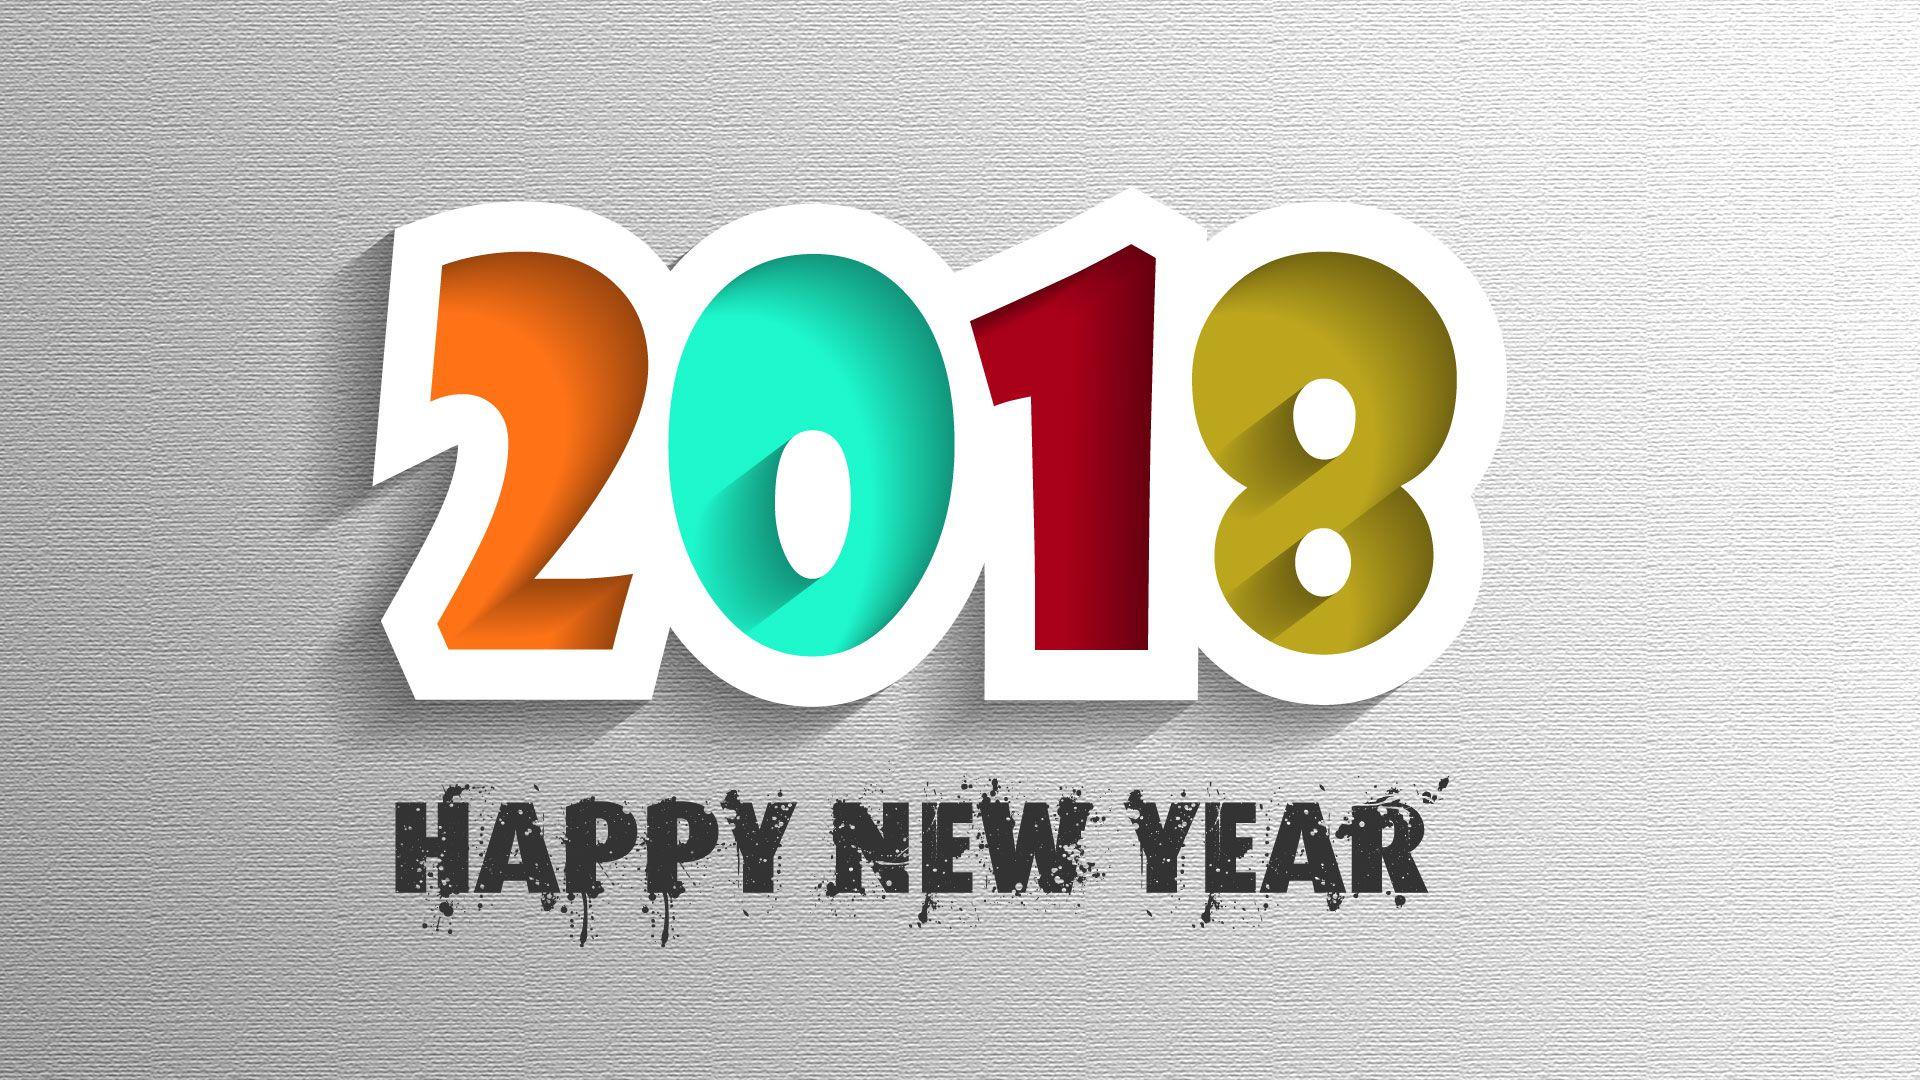 Happy New Year Desktop Wallpaper 62291 1920x1080 px